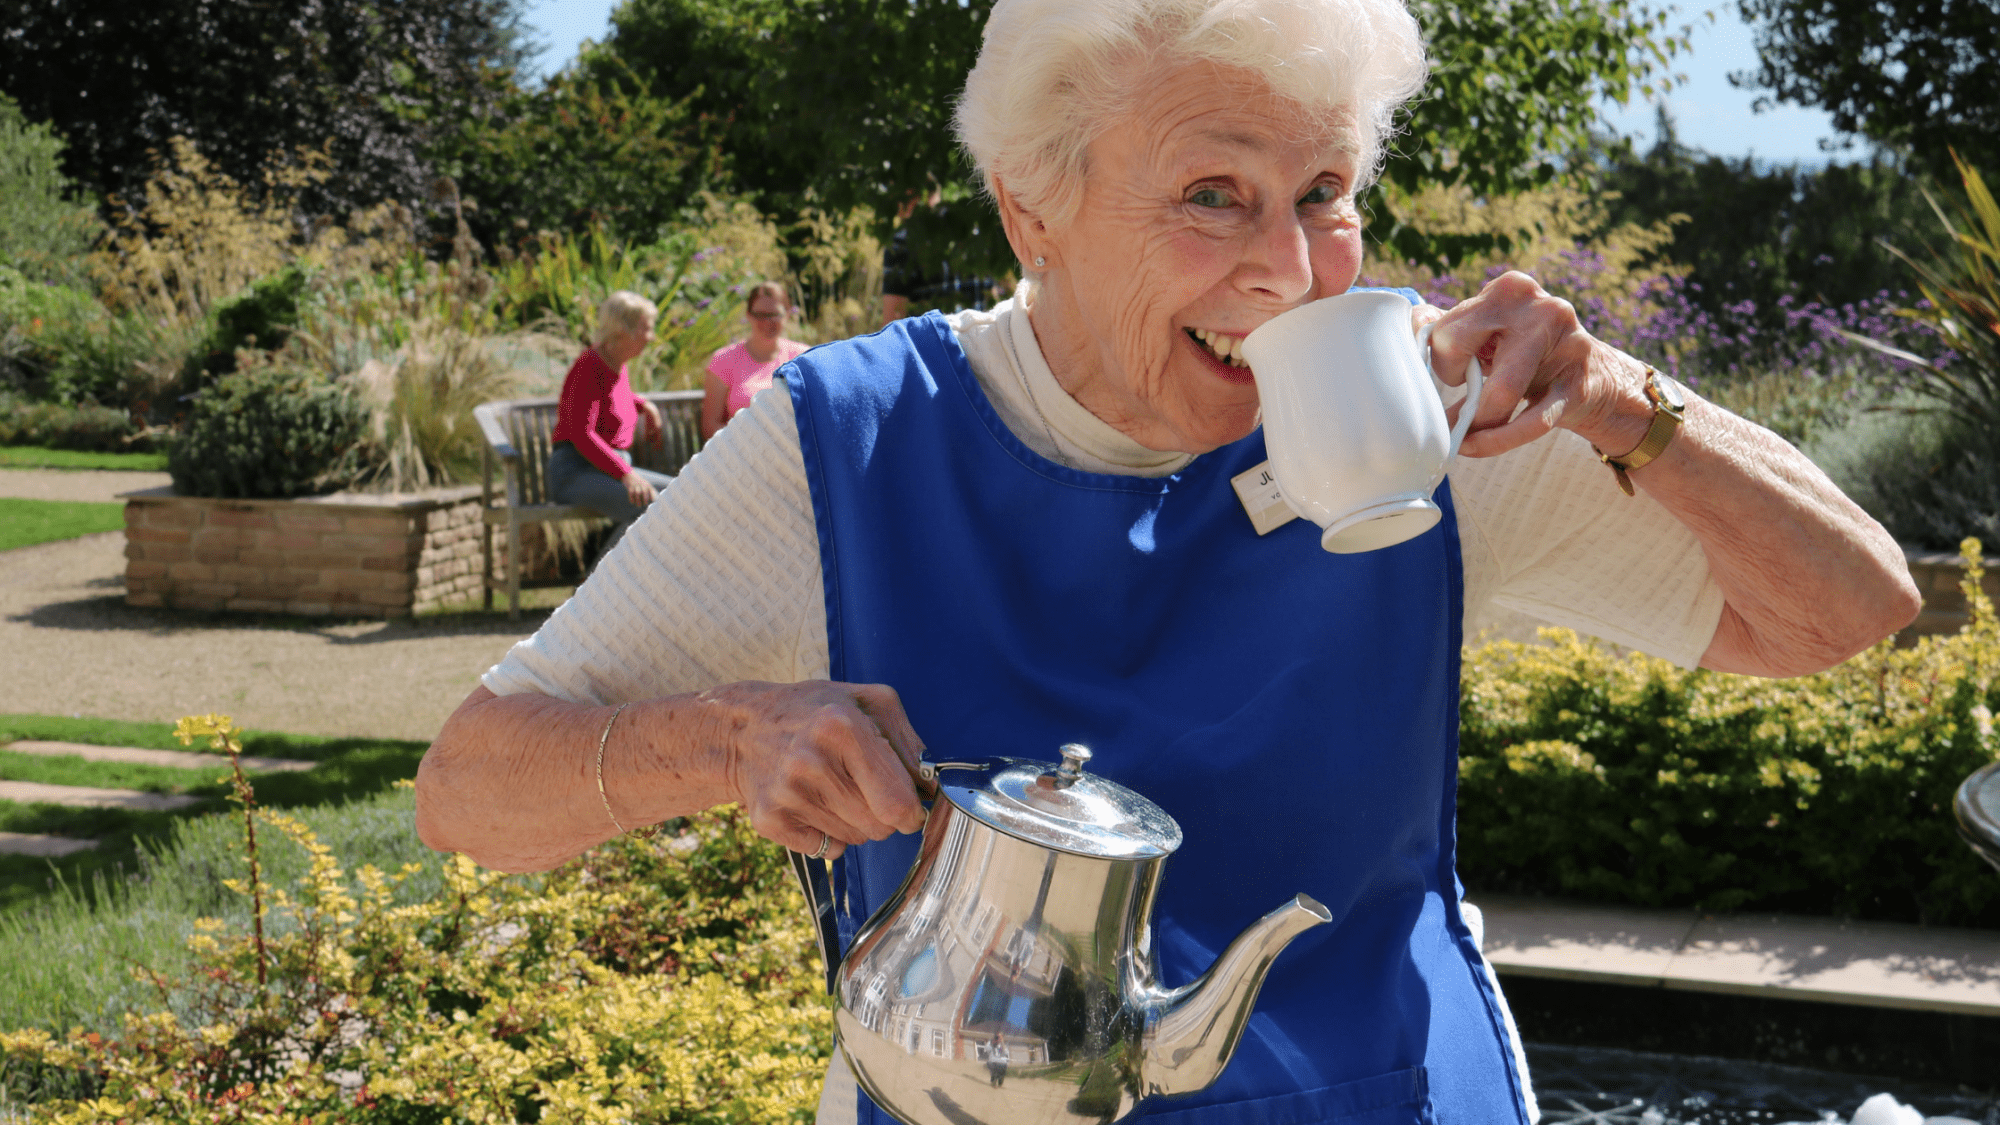 A volunteer jokingly sips a cup of tea outdoors.